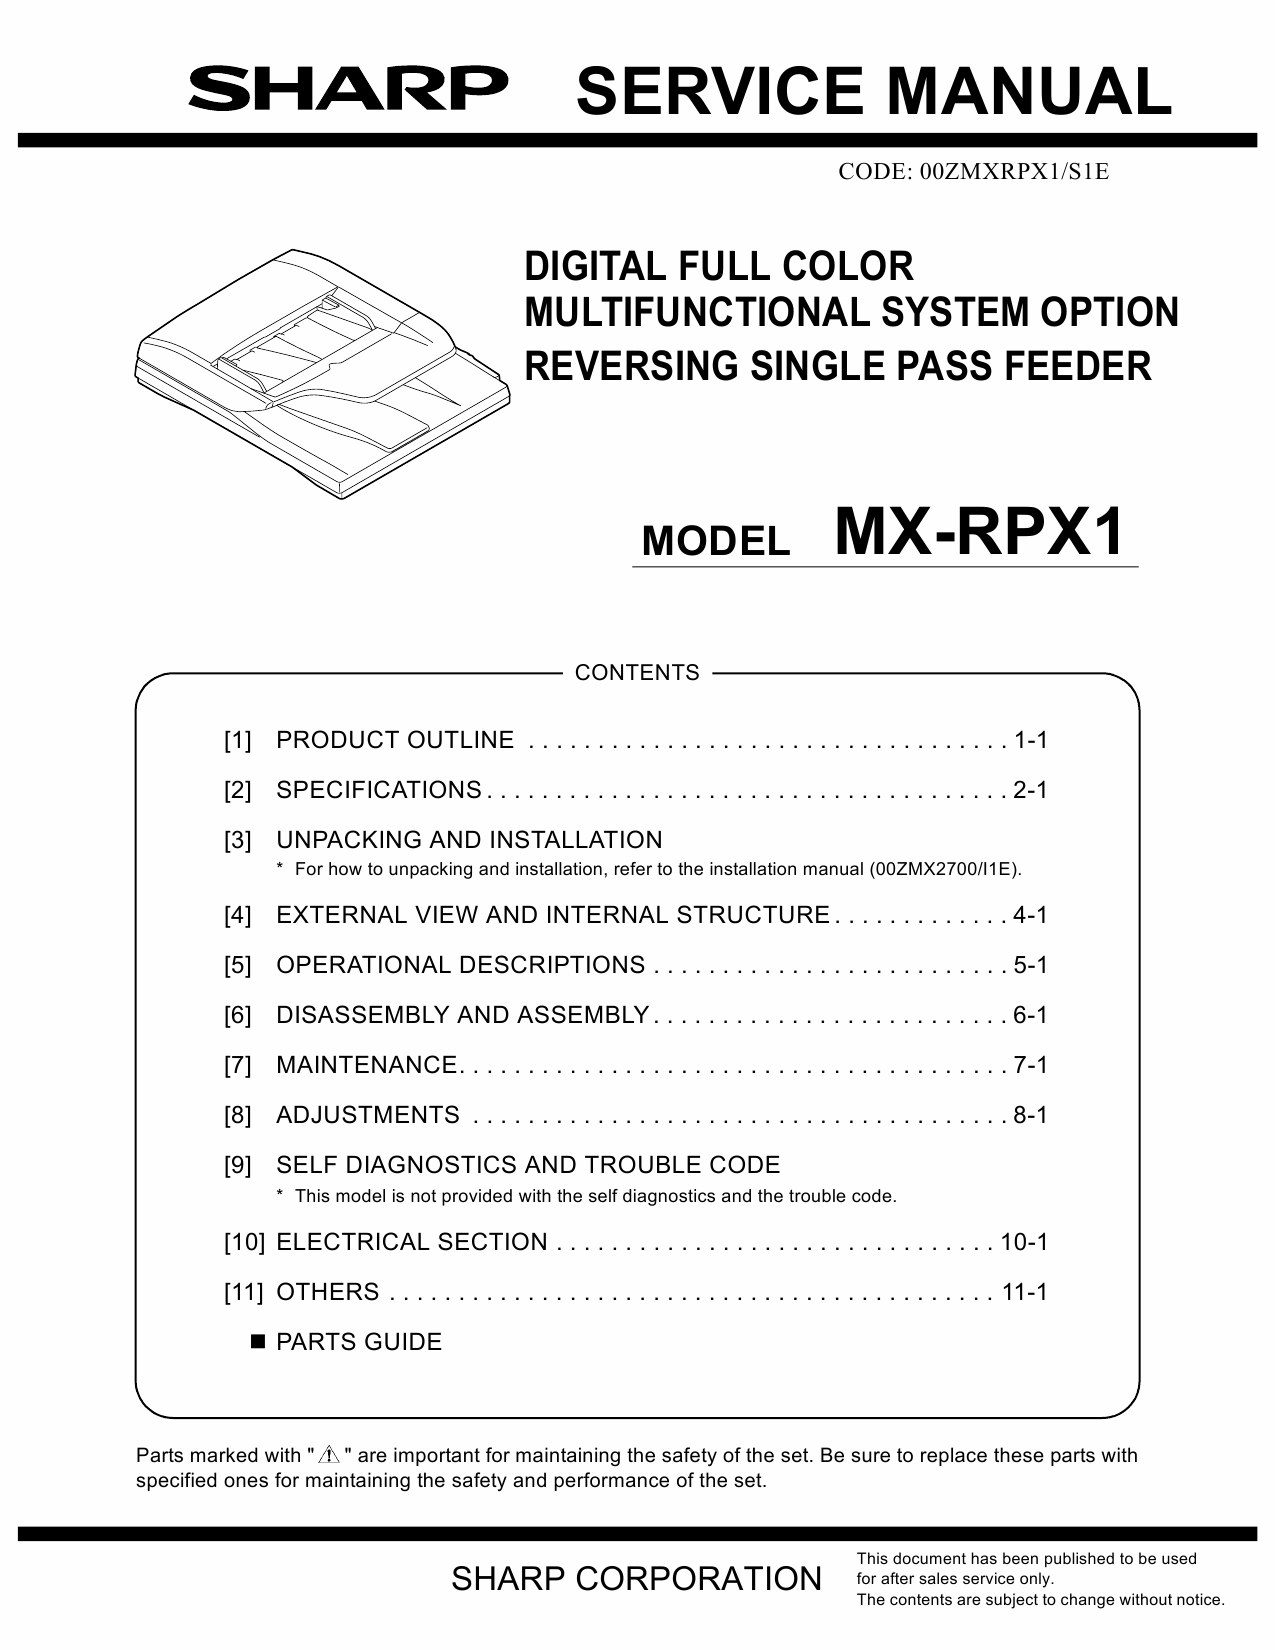 SHARP MX RPX1 Service Manual-1